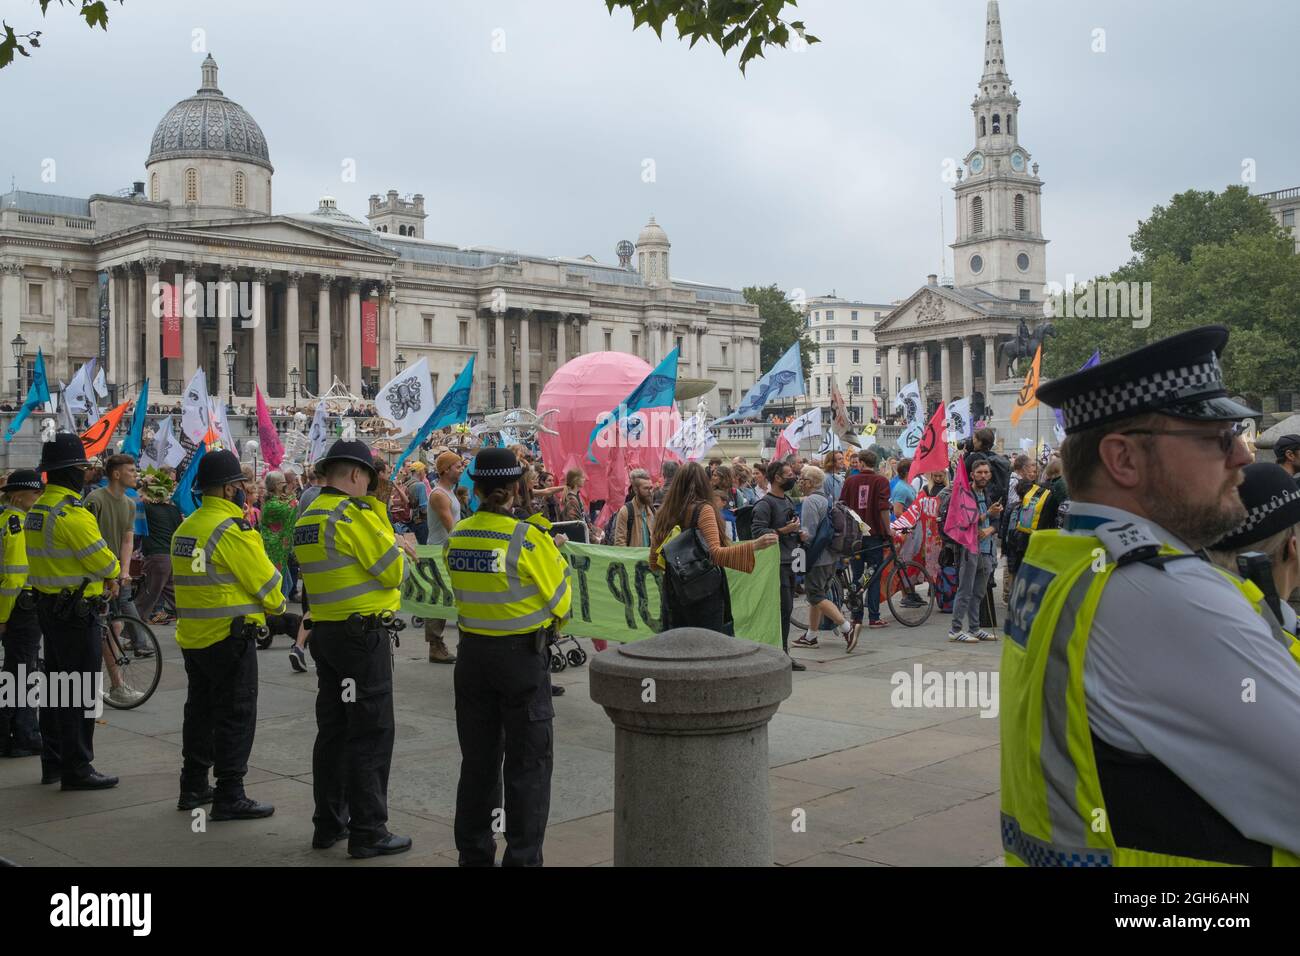 Extinction Rebellion demonstration, Trafalgar Square, London Stock Photo